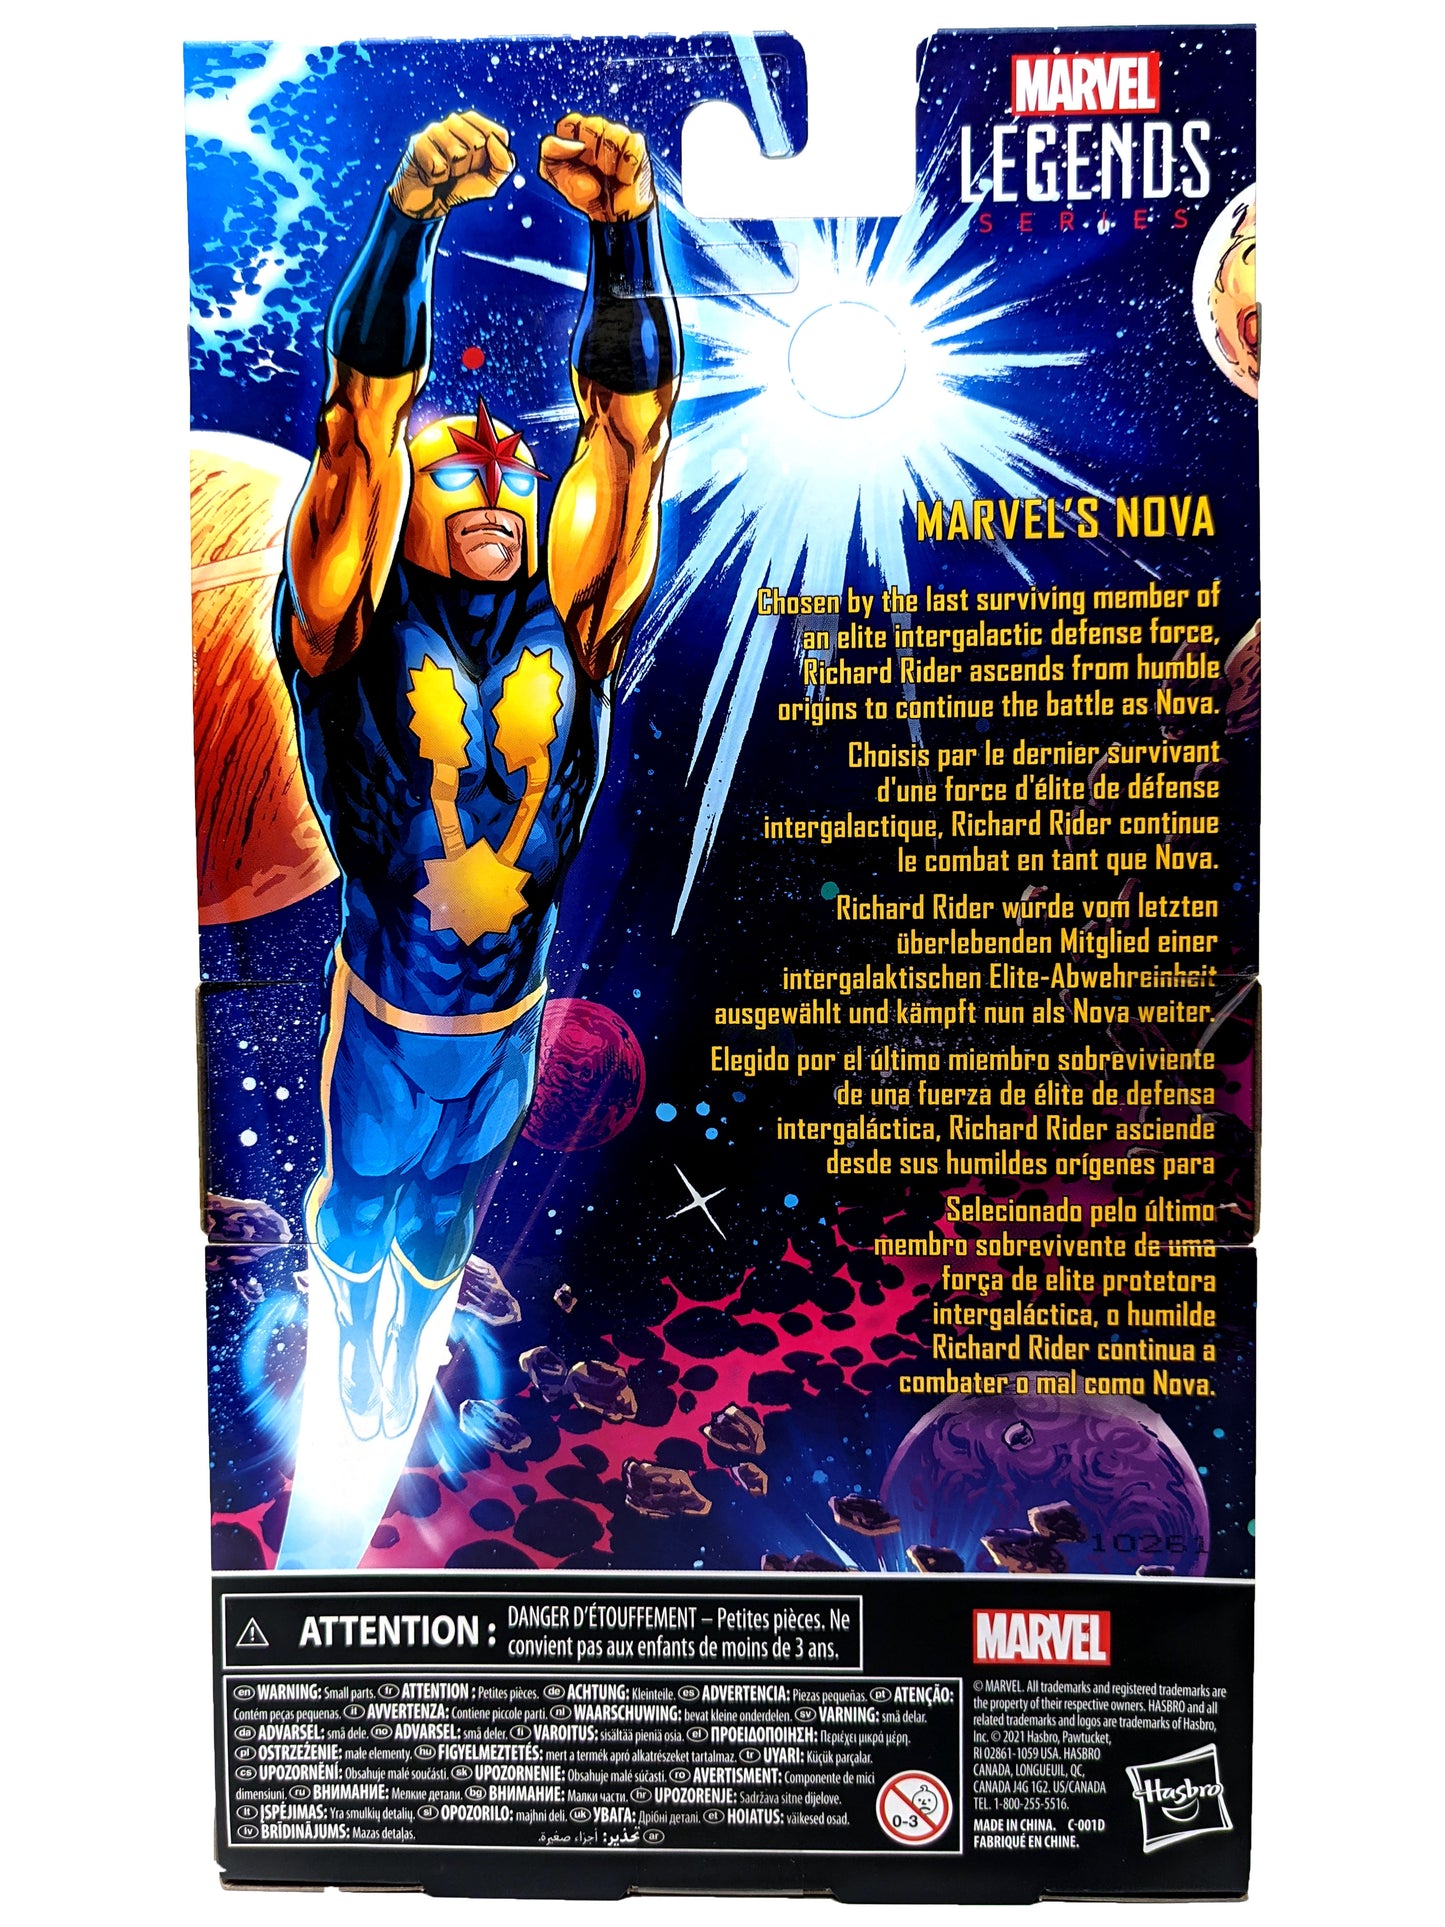 Marvel Legends - The Man Called Nova